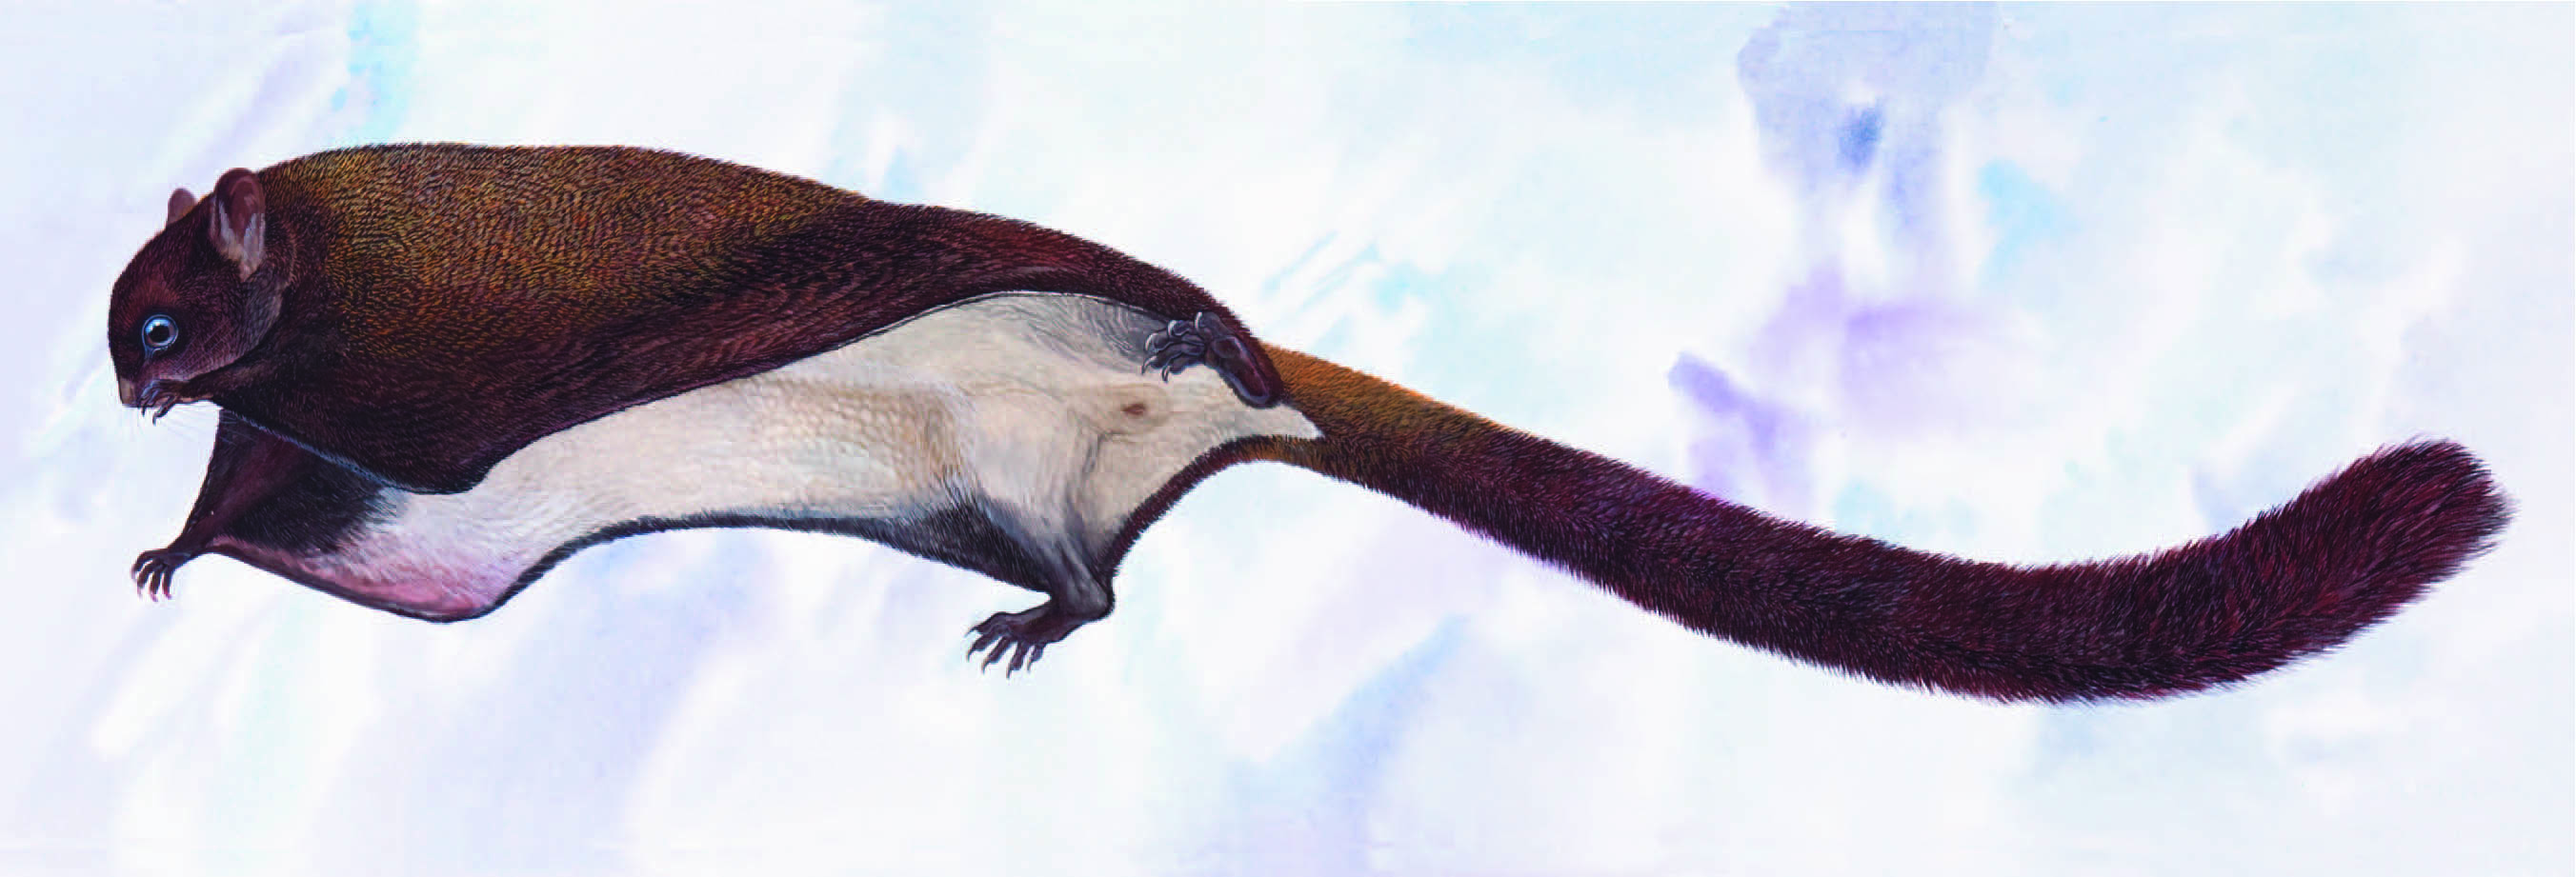 Hainan Giant Flying Squirrel / Petaurista hainana